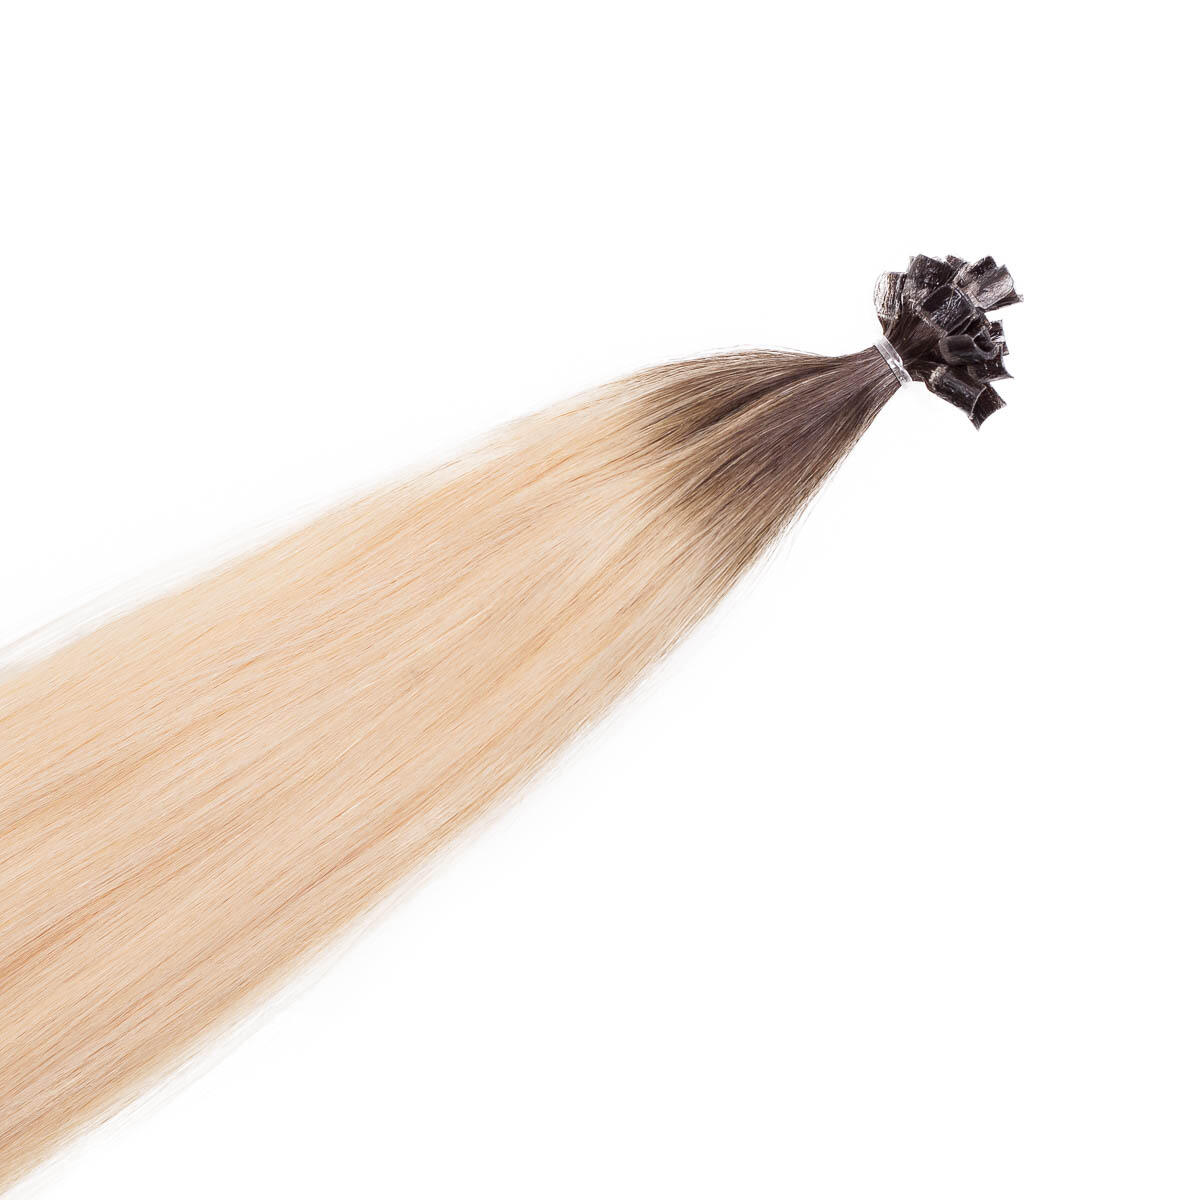 Nail Hair Premium R2.6/8.0 Dark Ash Blonde Root 50 cm